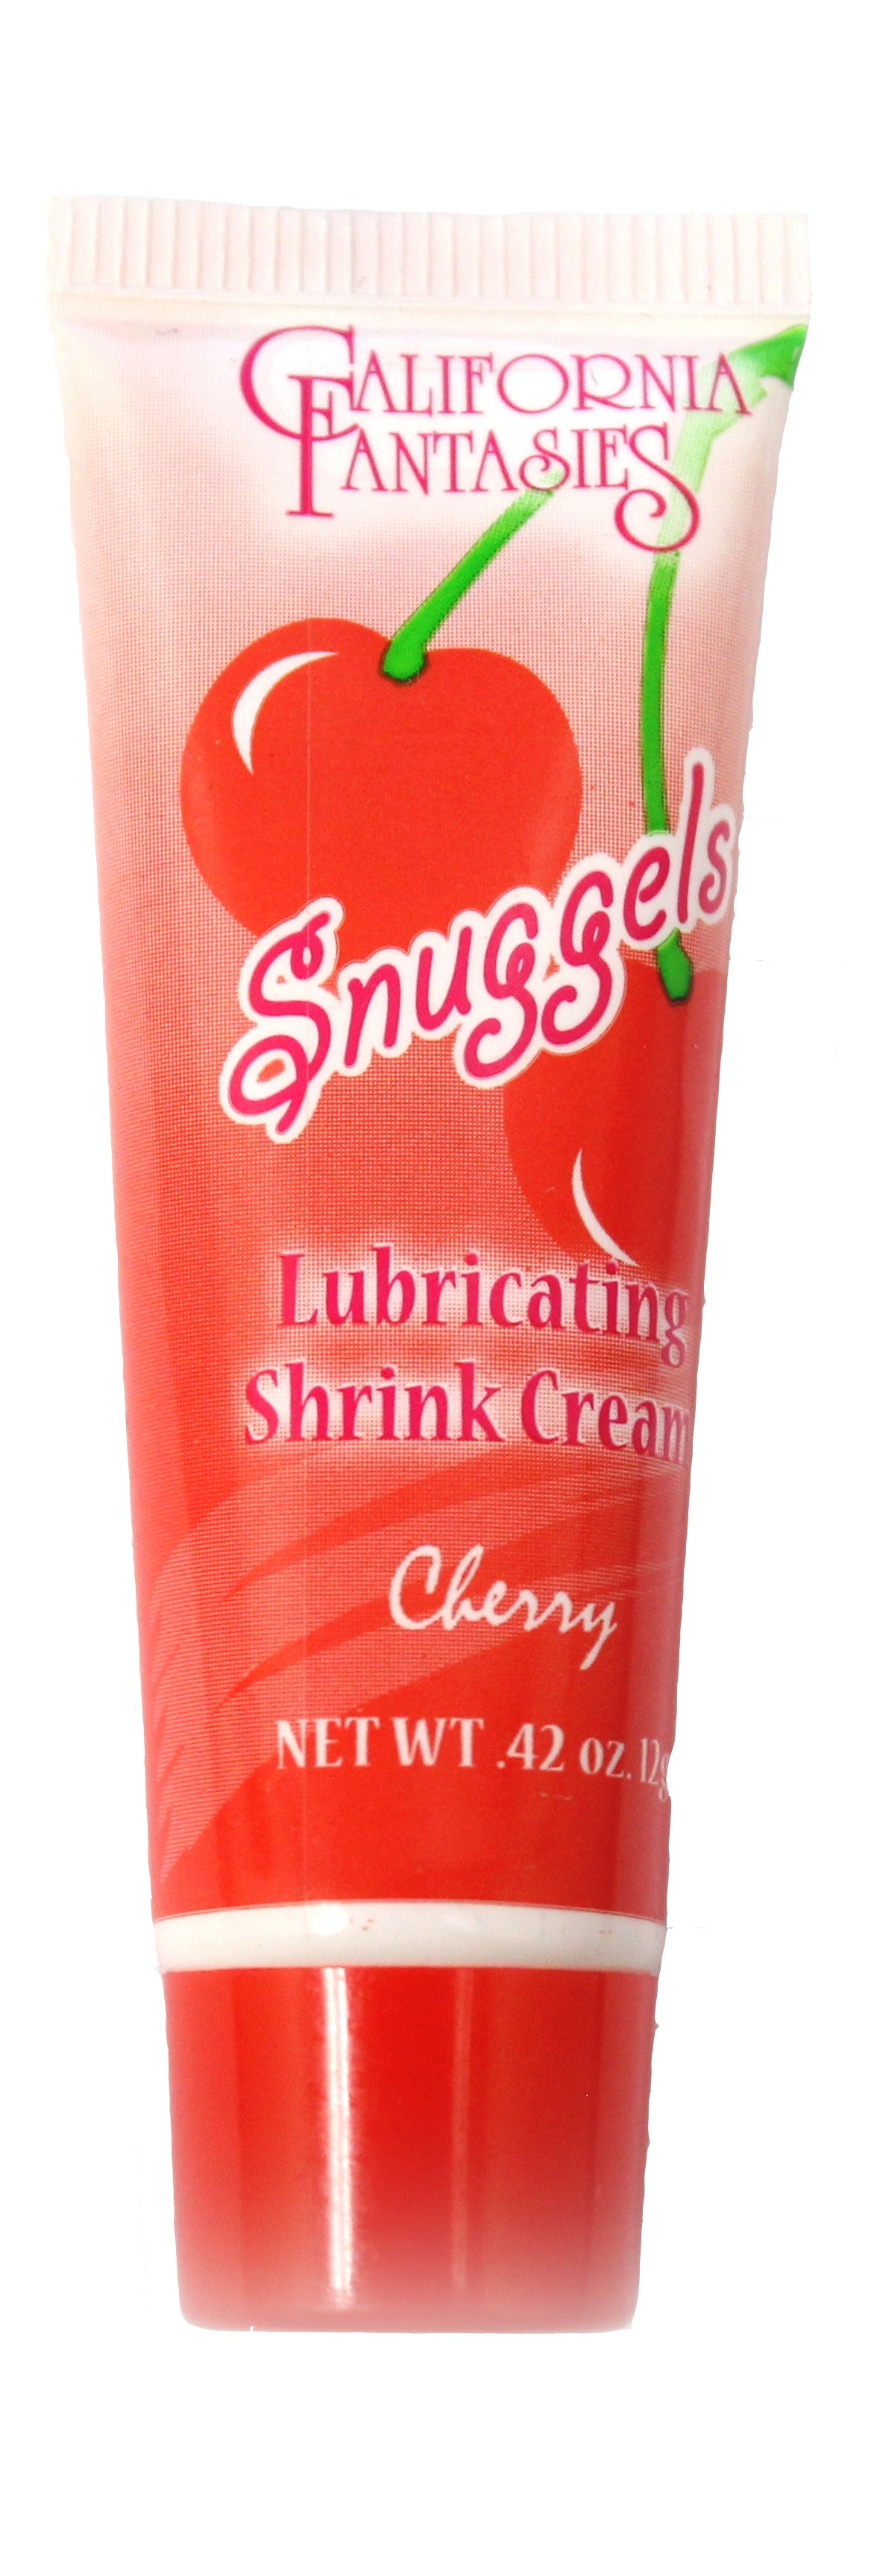 Snuggels - Lubricating Shrink Cream - Cherry - 0.42 Oz. Tube - Each CF-SLC